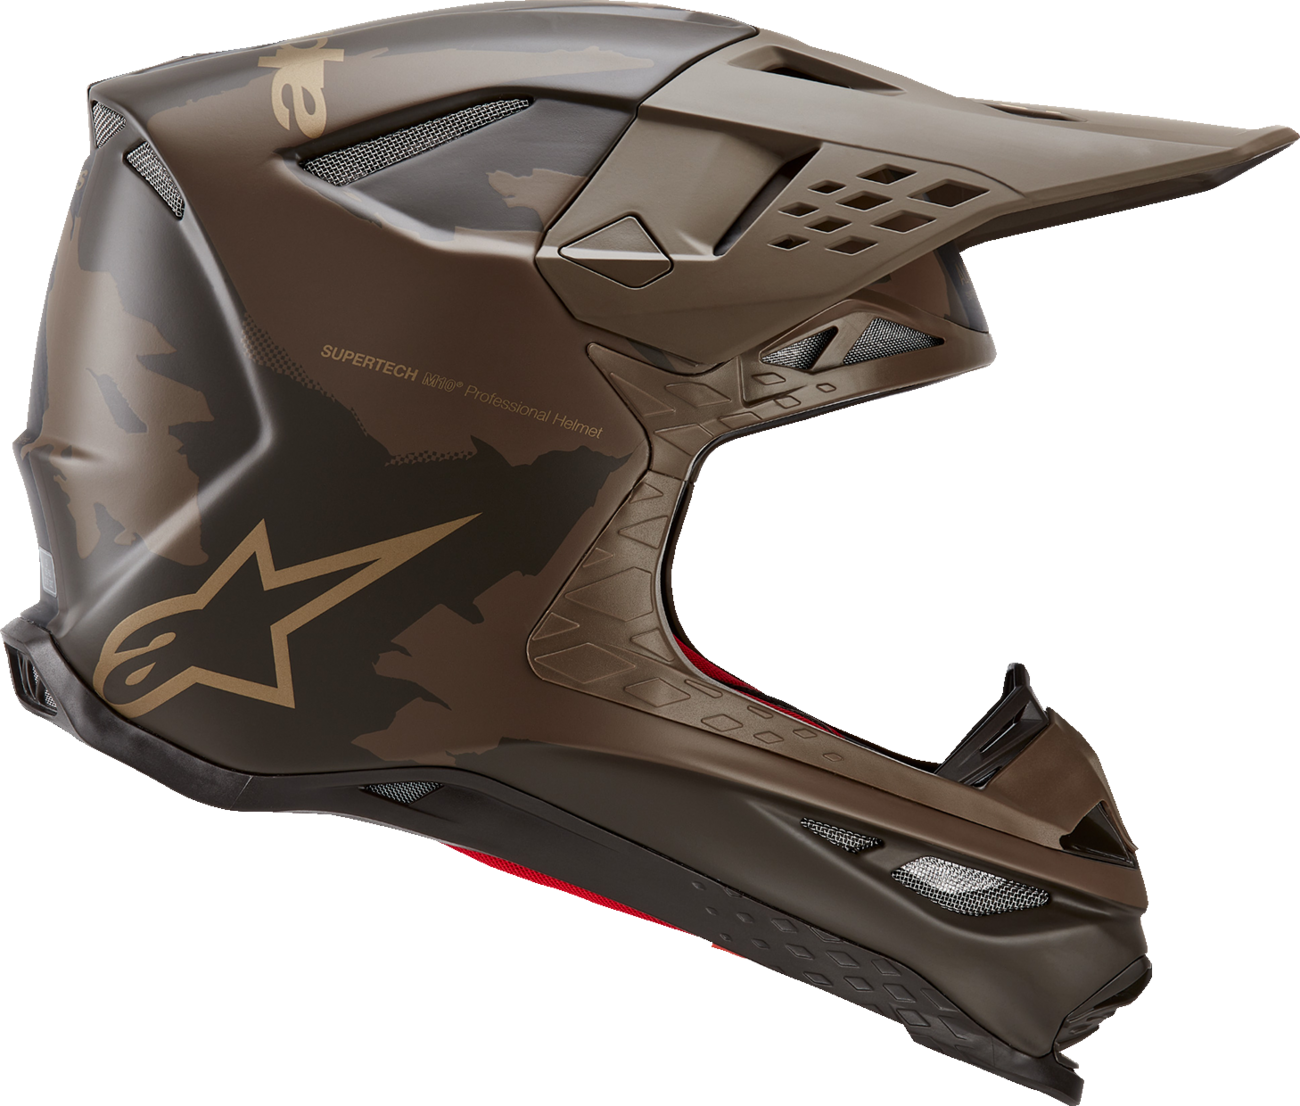 ALPINESTARS Supertech M10 Helmet - Squad - MIPS® - Dark Brown/Gold - Medium 8302823-839-MD